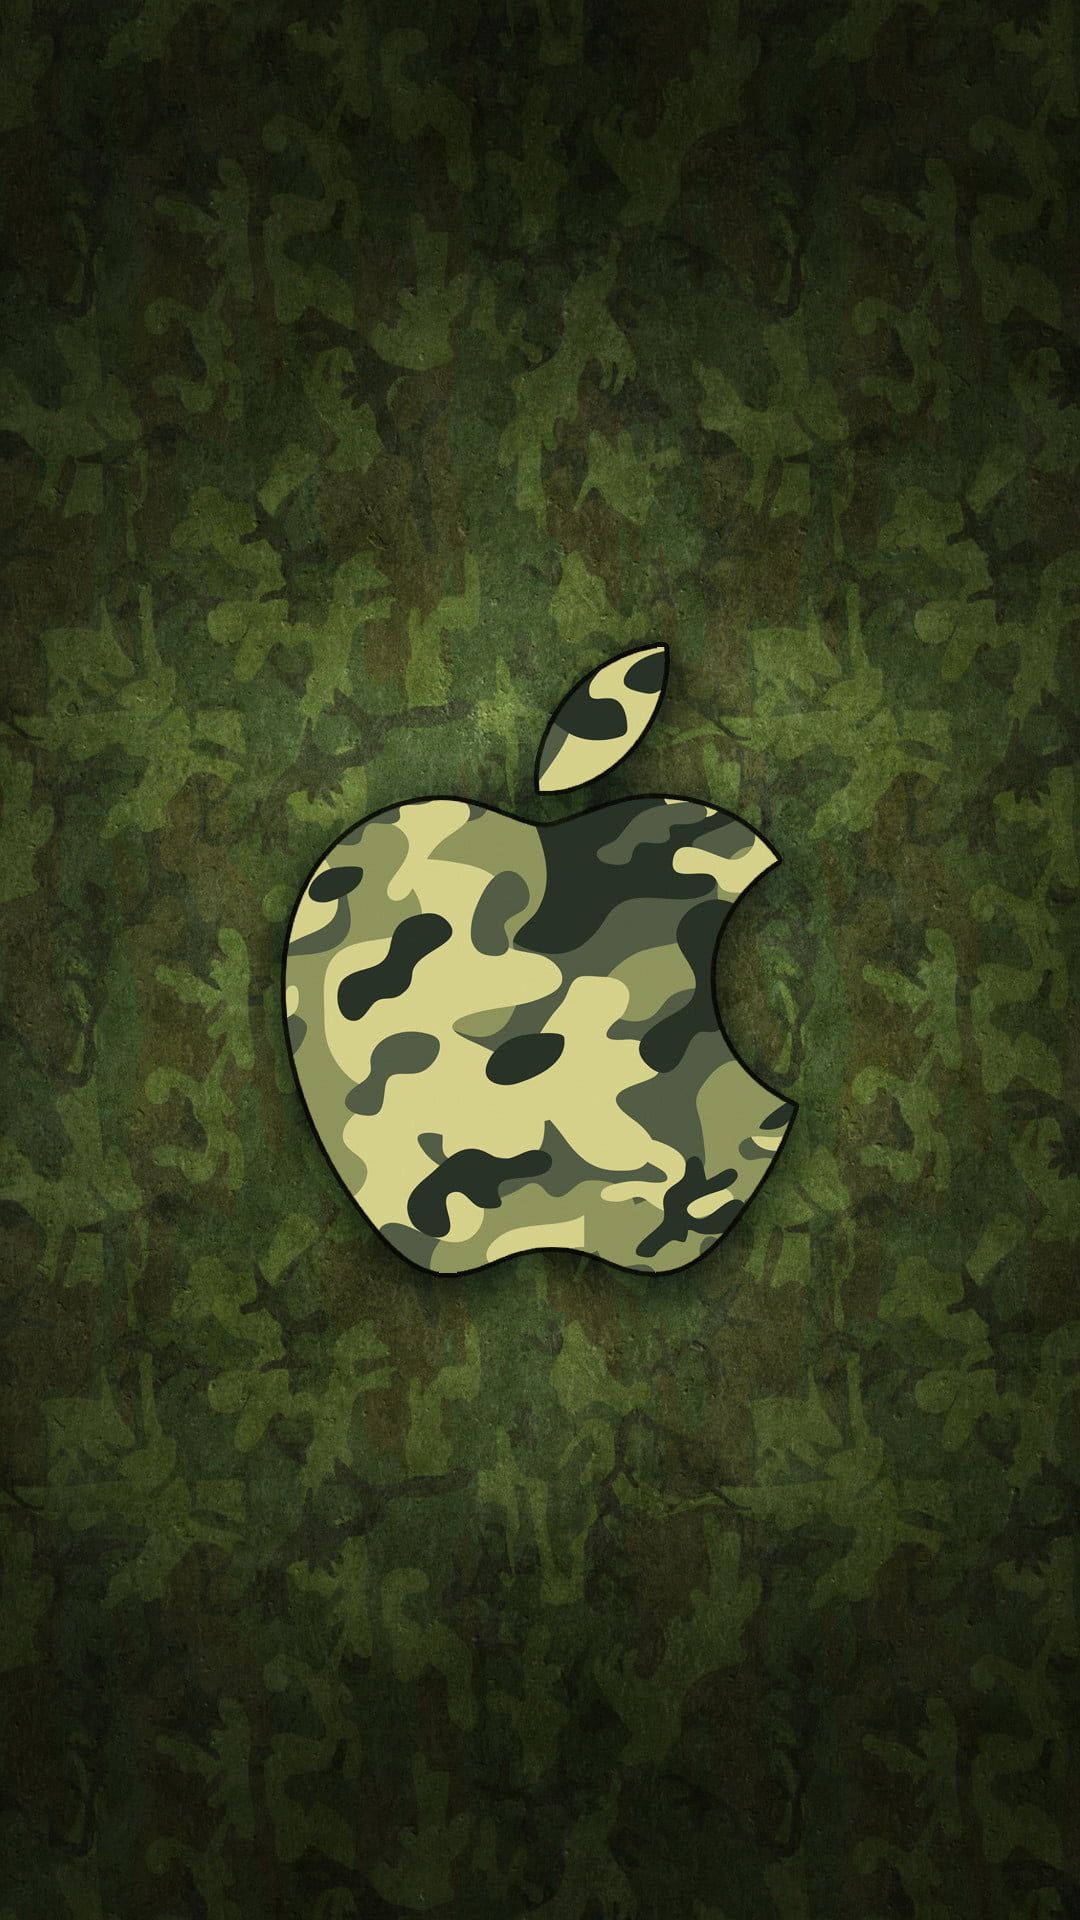 New iPhone Wallpaper iPhone Wallpaper Apple logo wallpaper